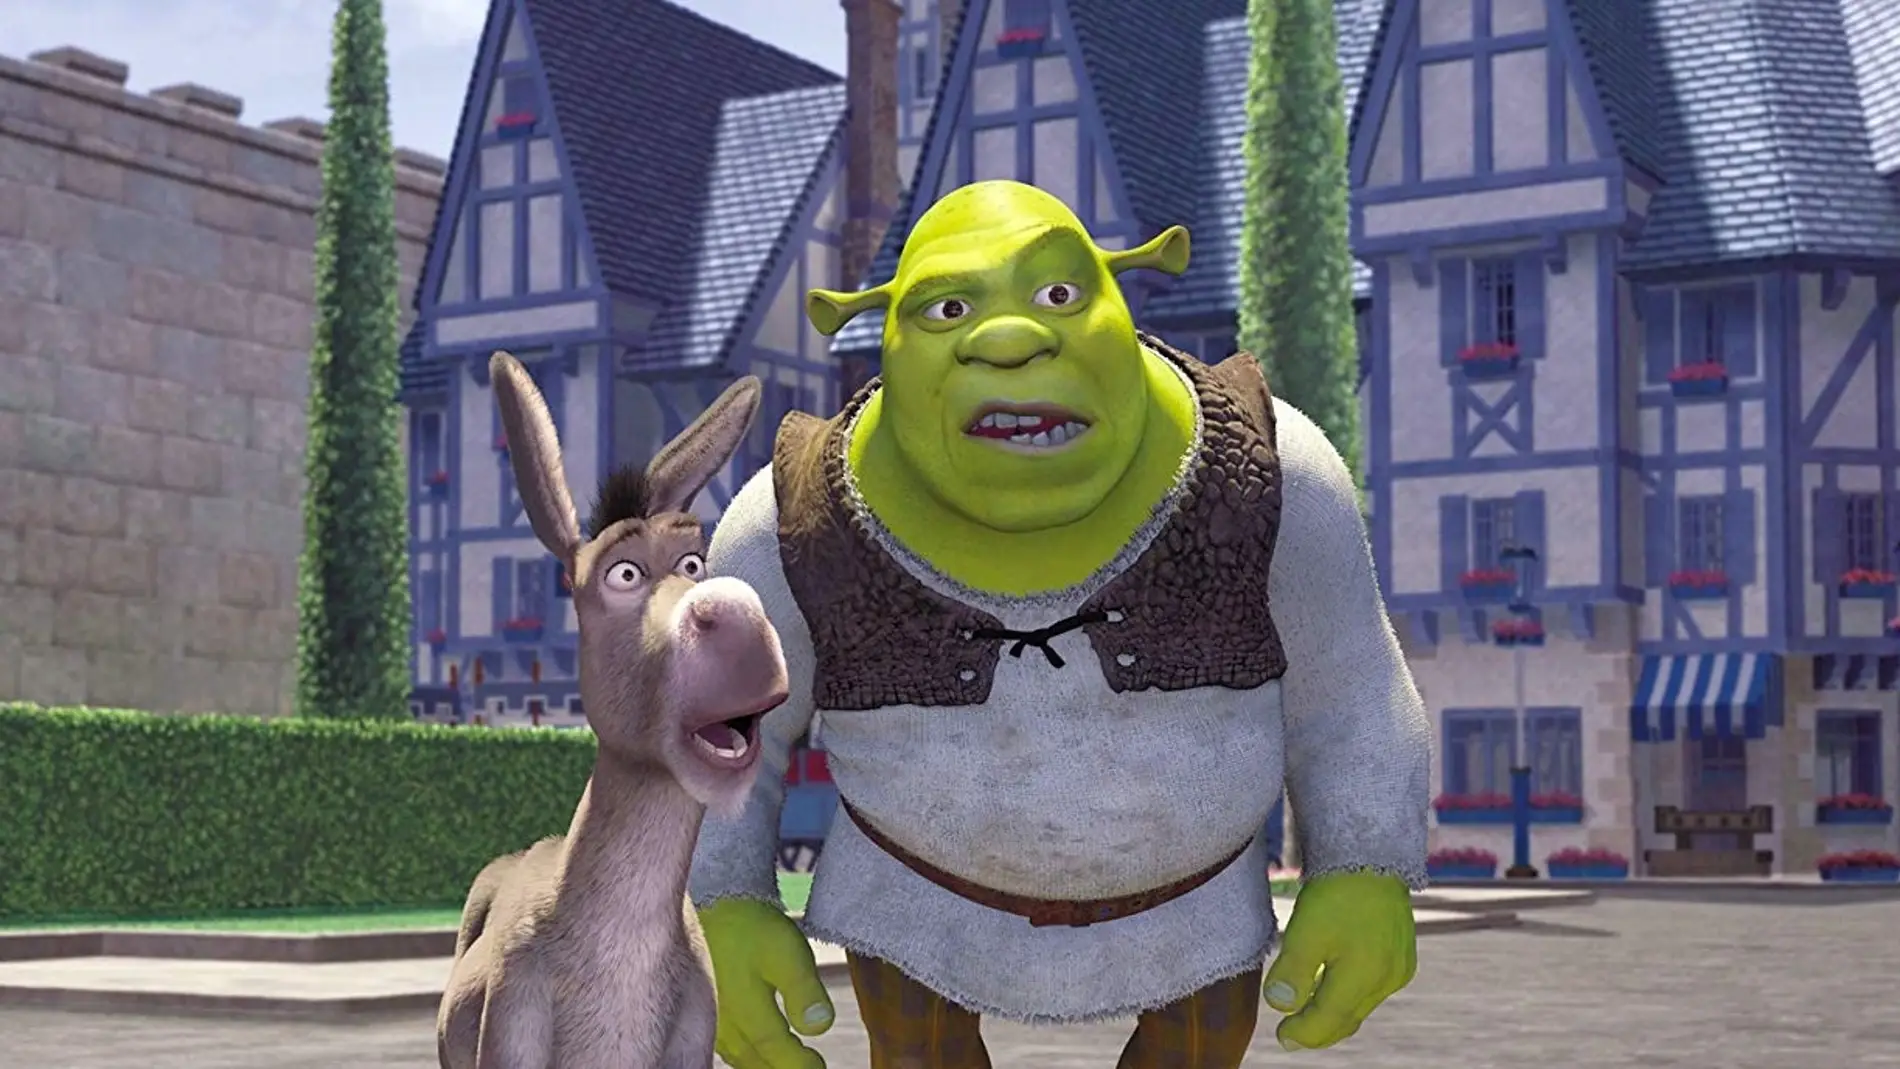 Asno y Shrek